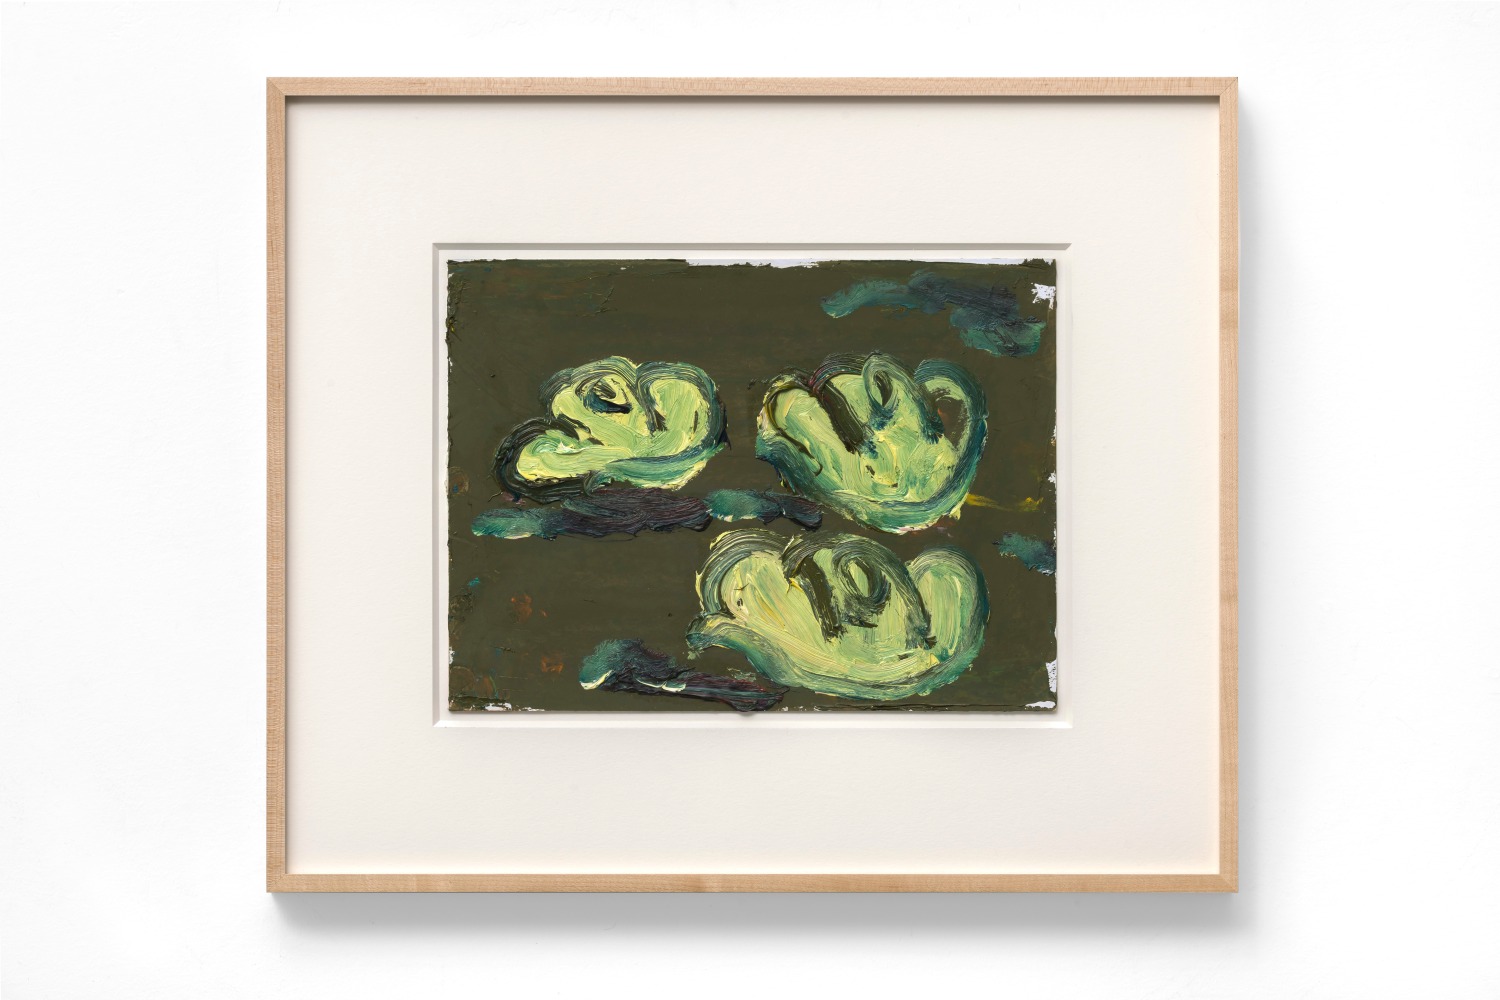 Ken Taylor Reynaga
Sombrero (rock h), 2022
Oil on paper
9h x 12w in
22.86h x 30.48w cm